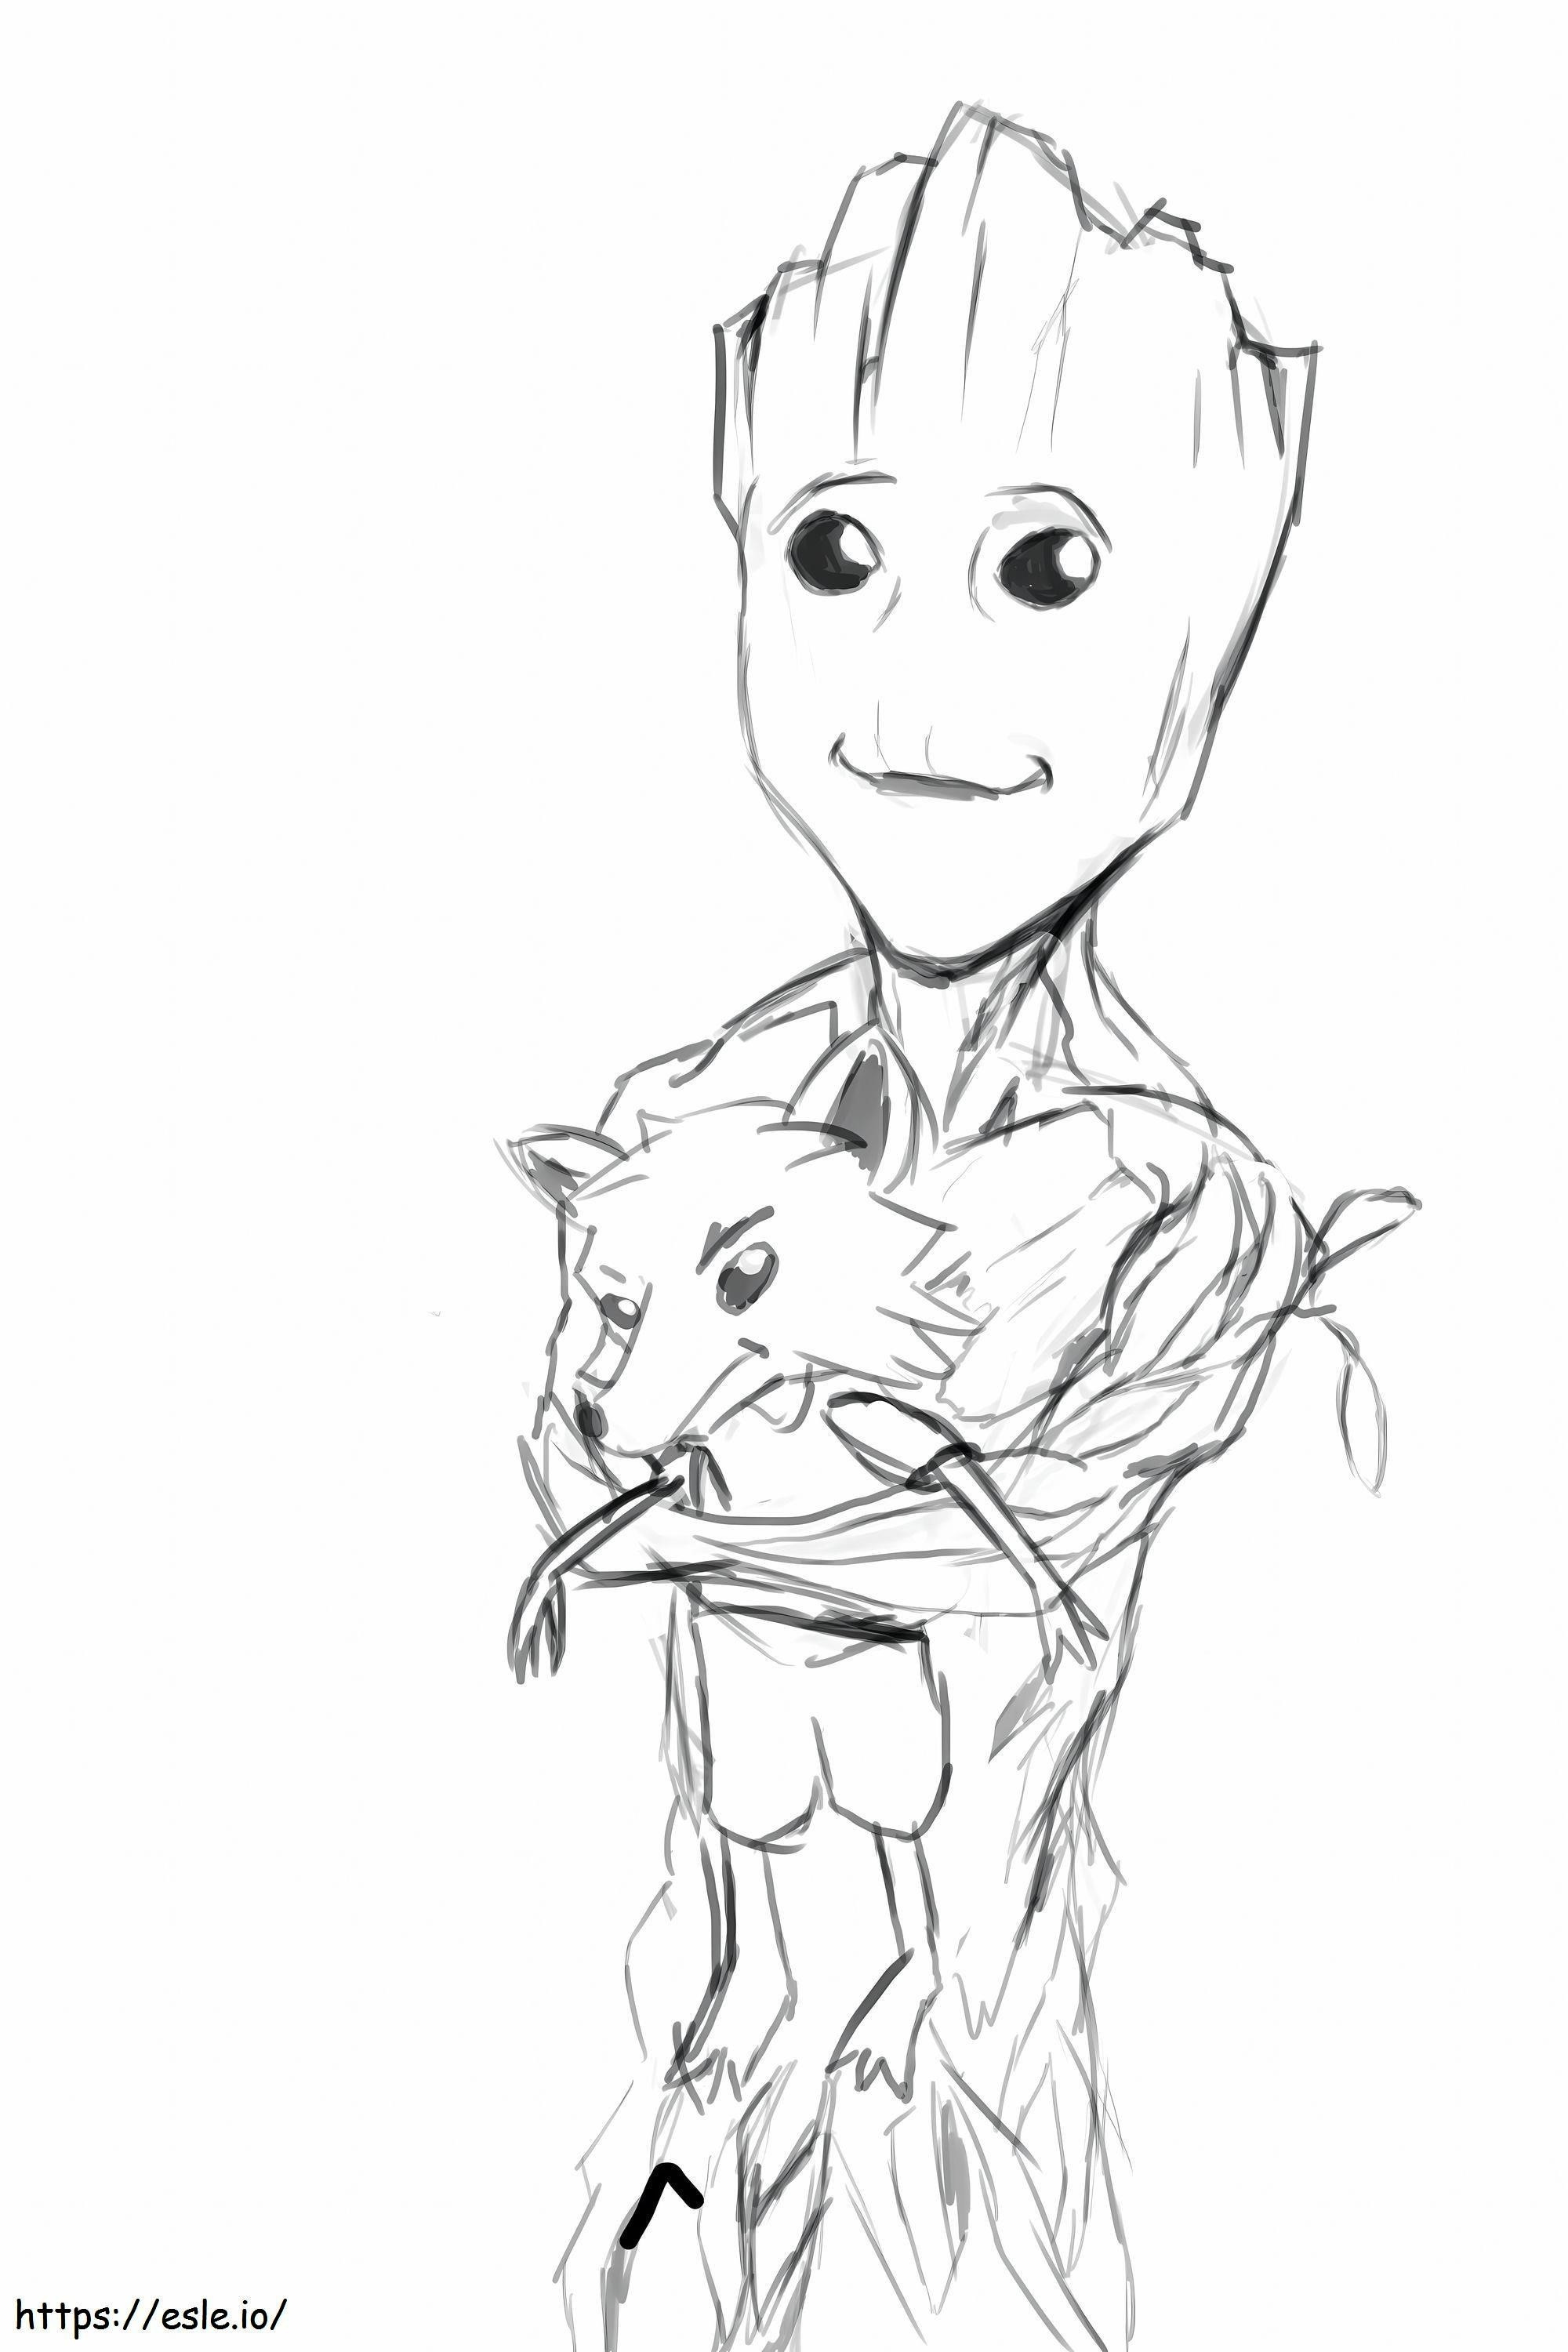 Dibujo de Groot sosteniendo un zorro escamoso para colorear